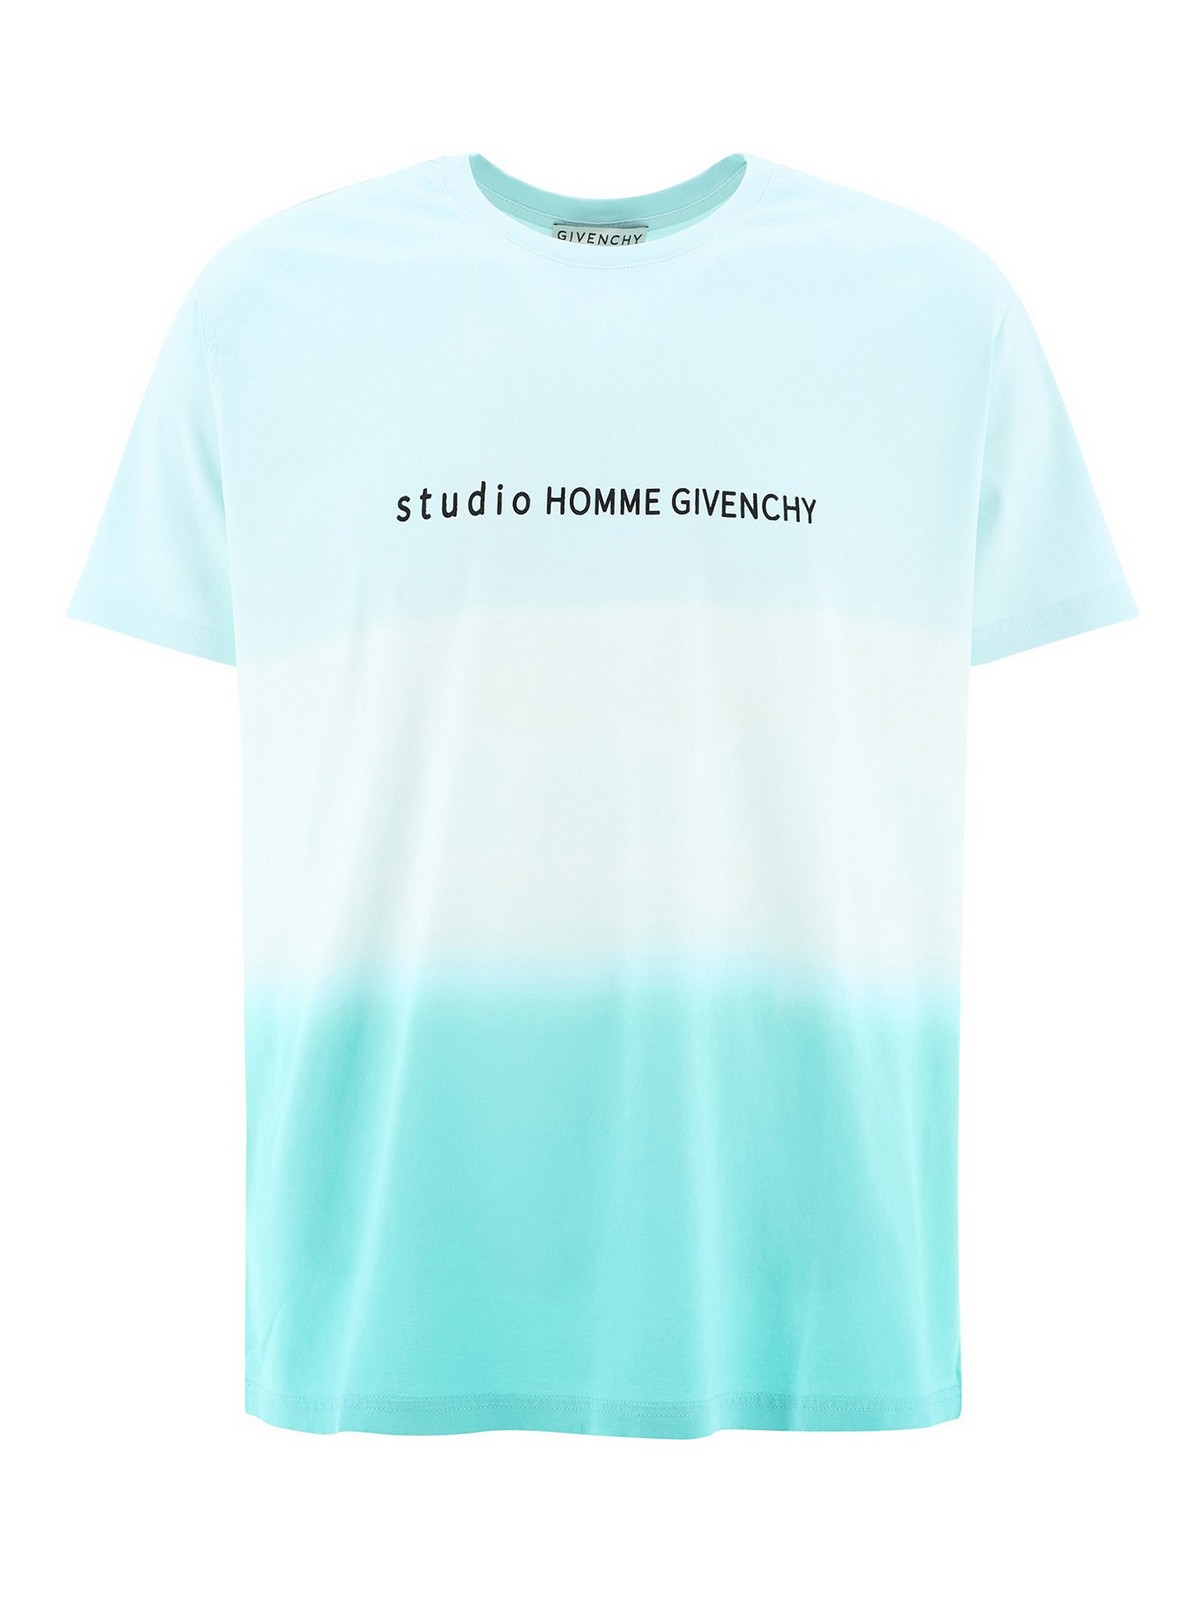 T-shirts Givenchy - Studio Homme T-shirt - BM70XL3002326 | iKRIX.com